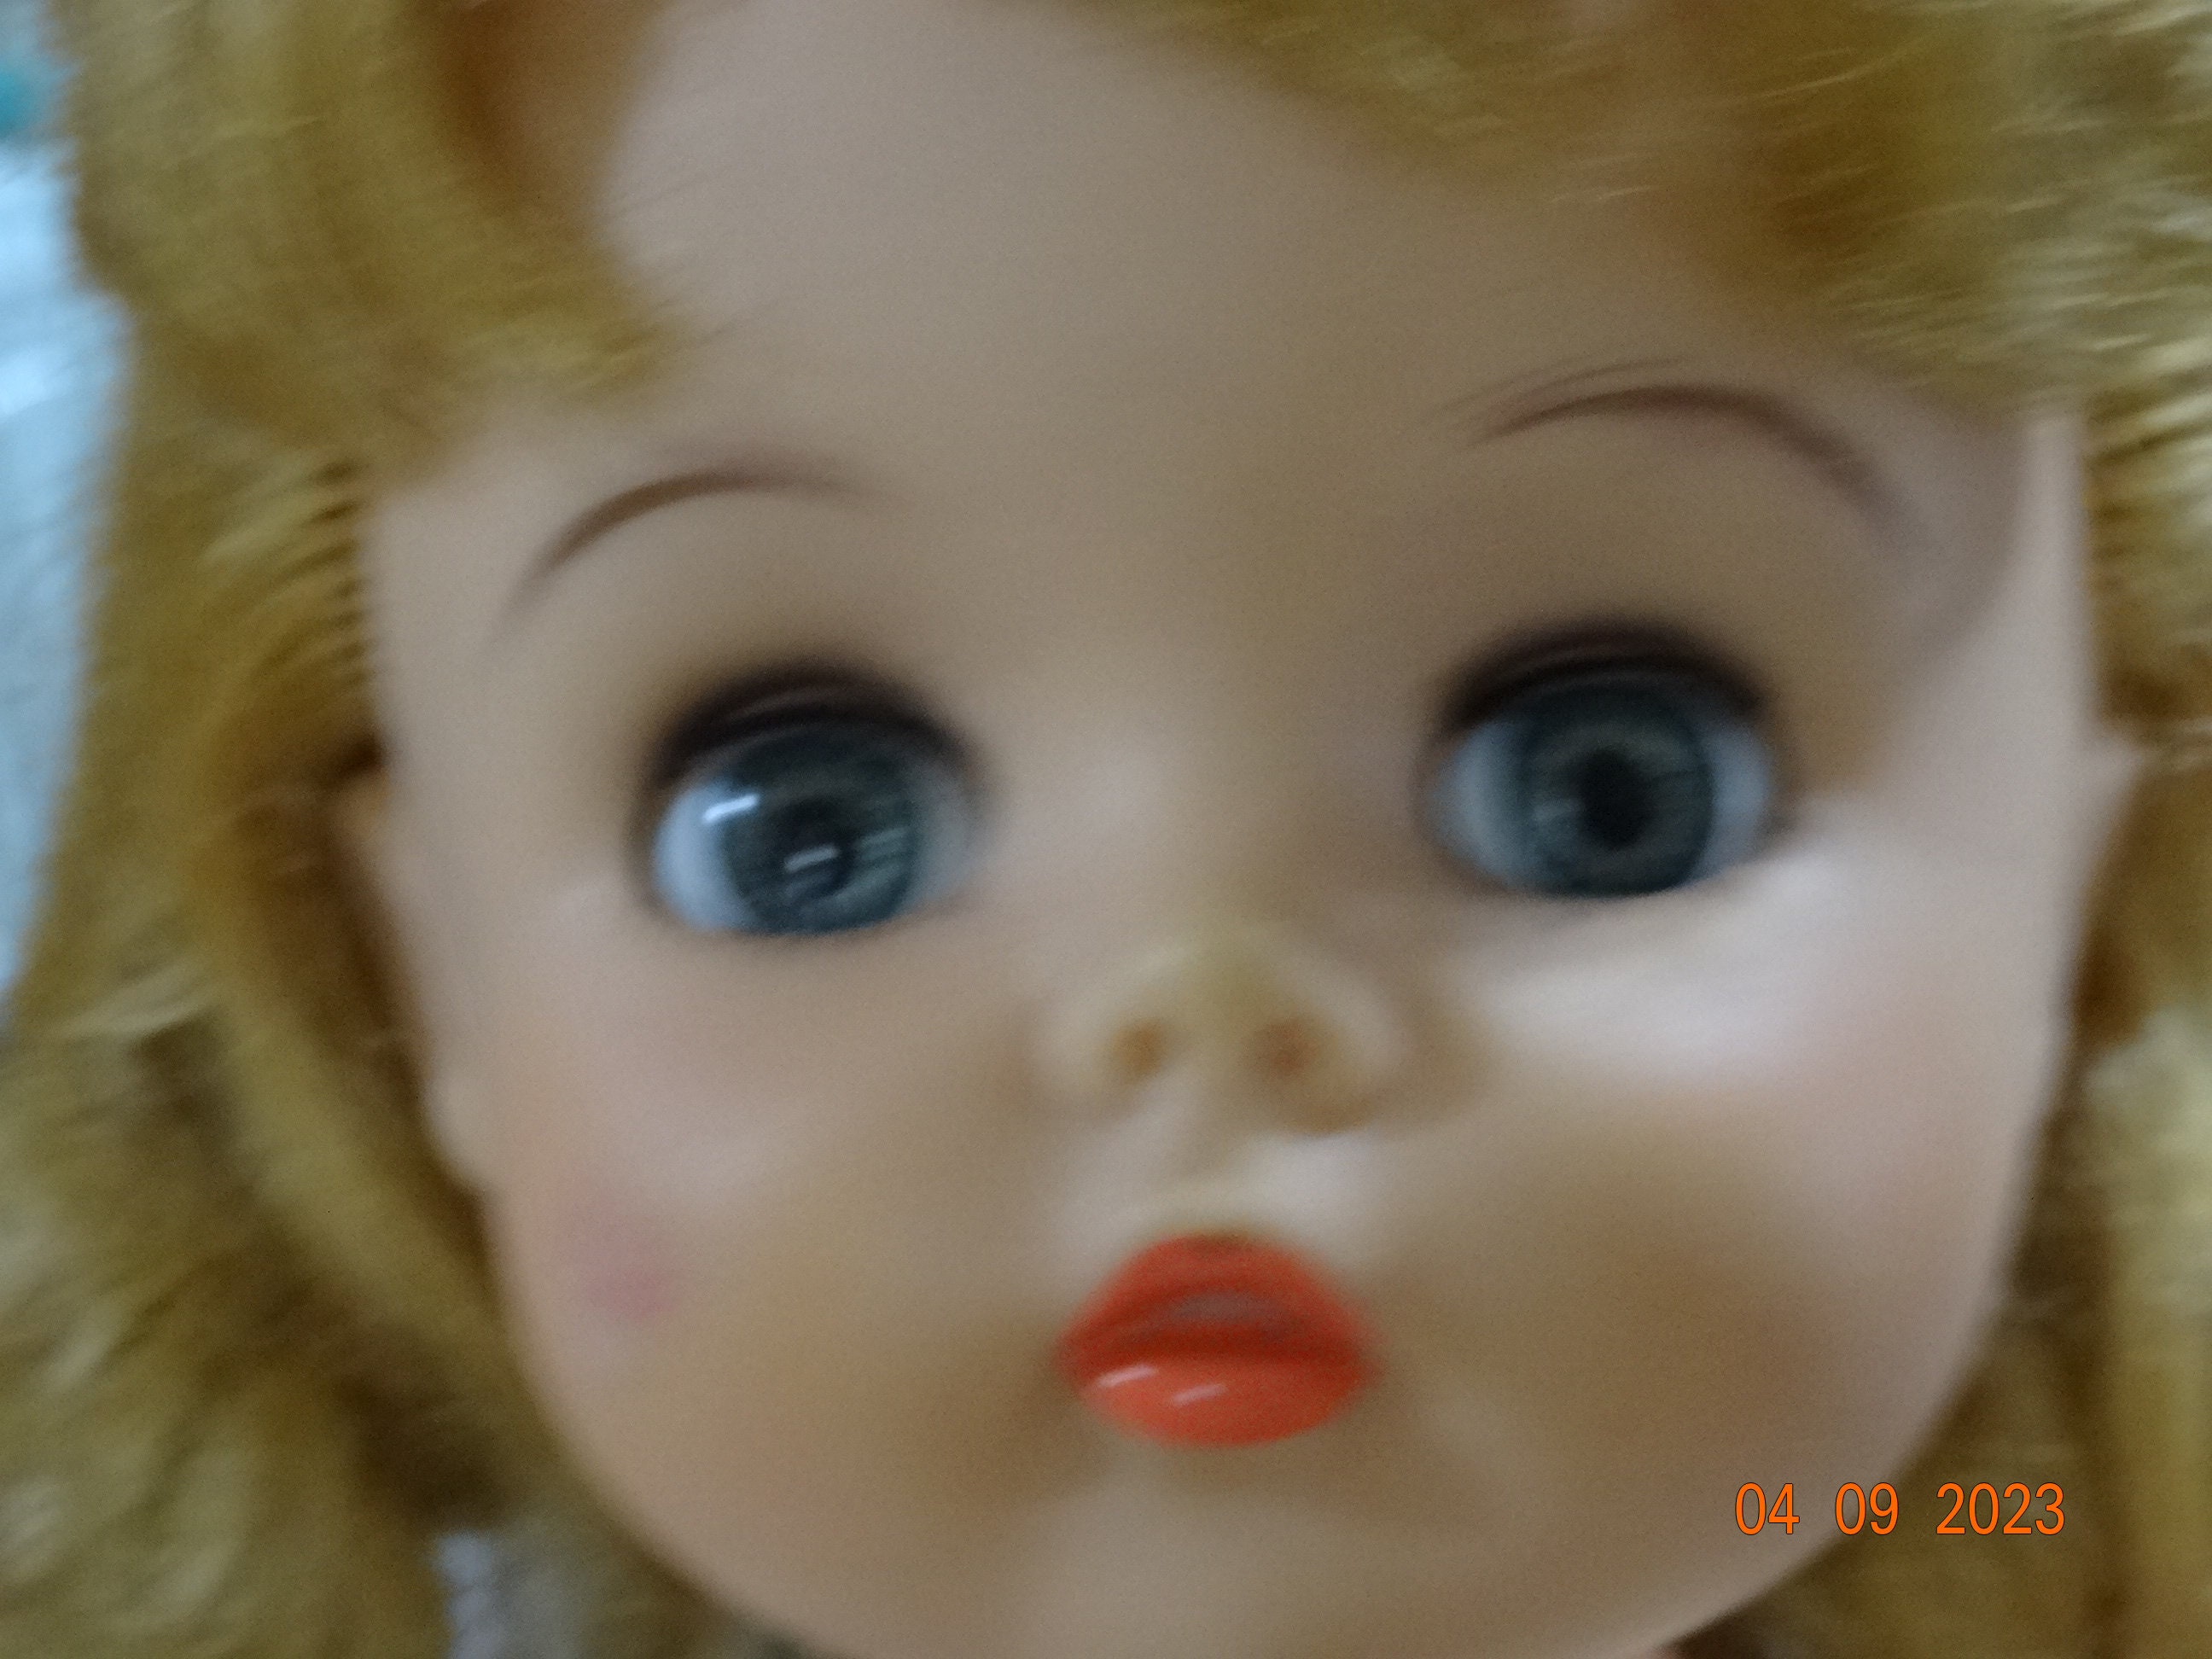 Vintage Sleepy Eyes Doll Dee an Cee D & C Doll 18 Tall Made in